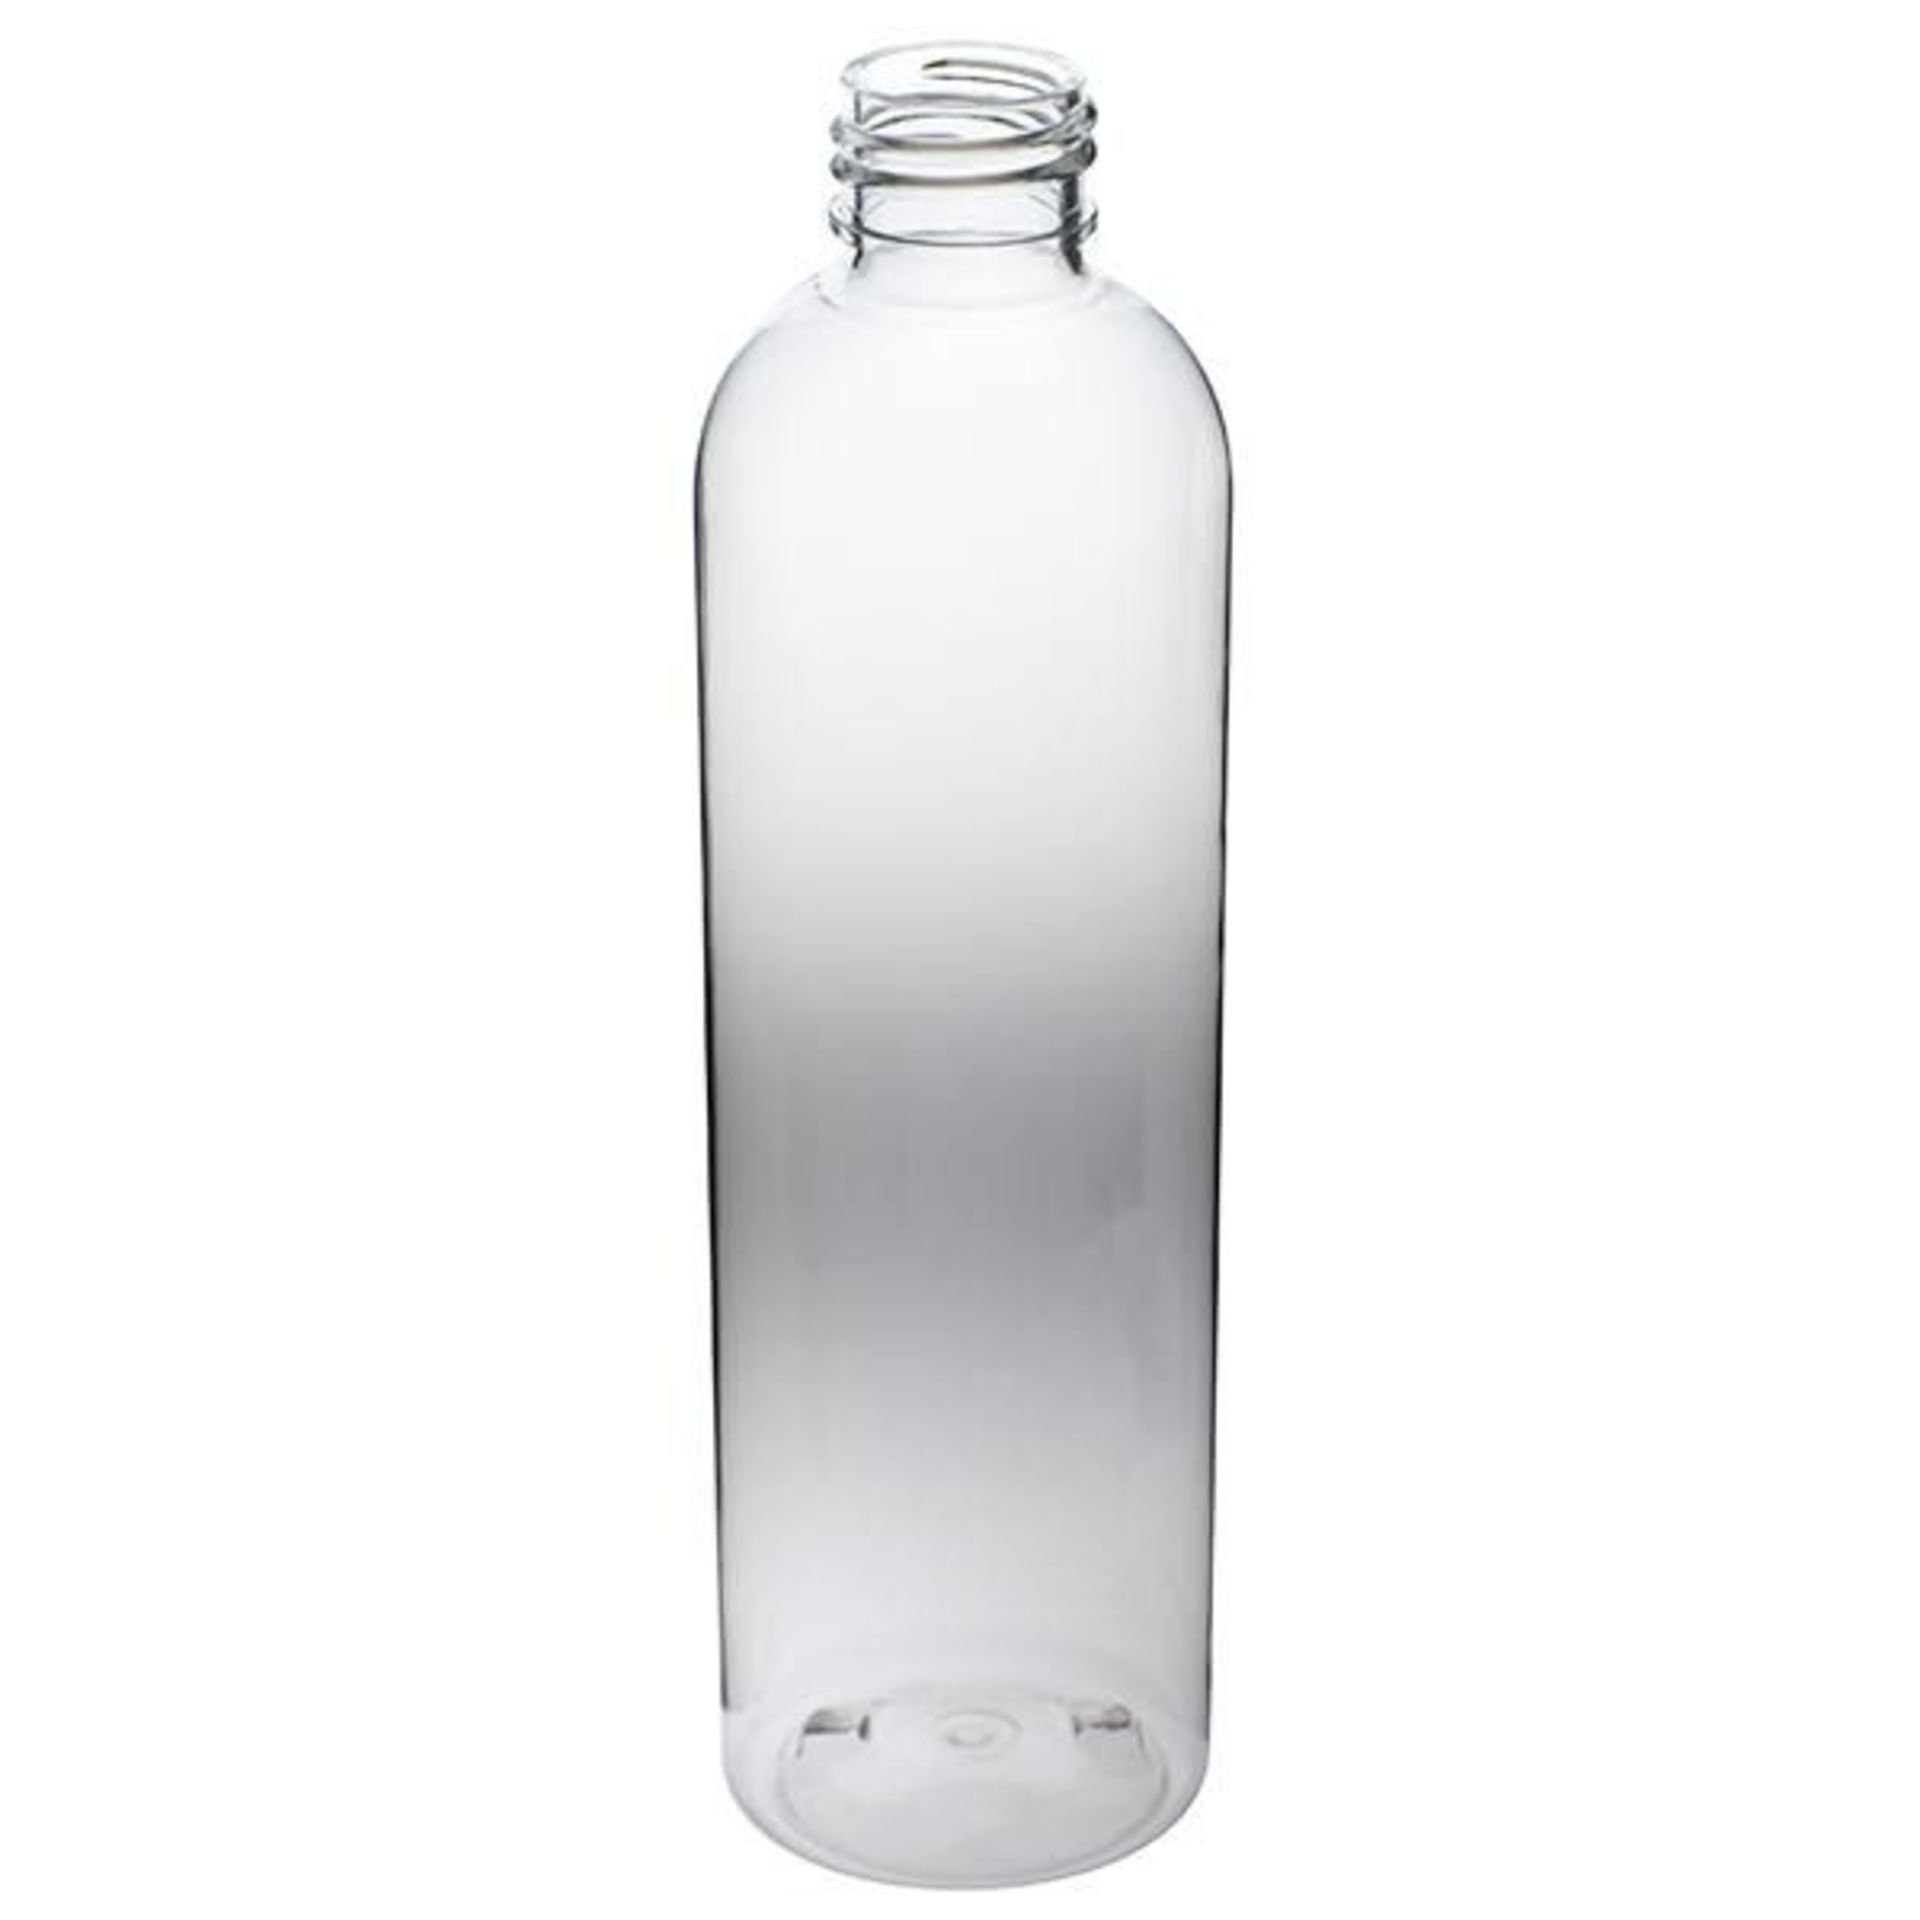 75,000 - Clear Plastic Bullet 8 oz Empty Bottles, 24-410 Threading Neck, 6.25" Tall, 2" Diameter - Image 2 of 10